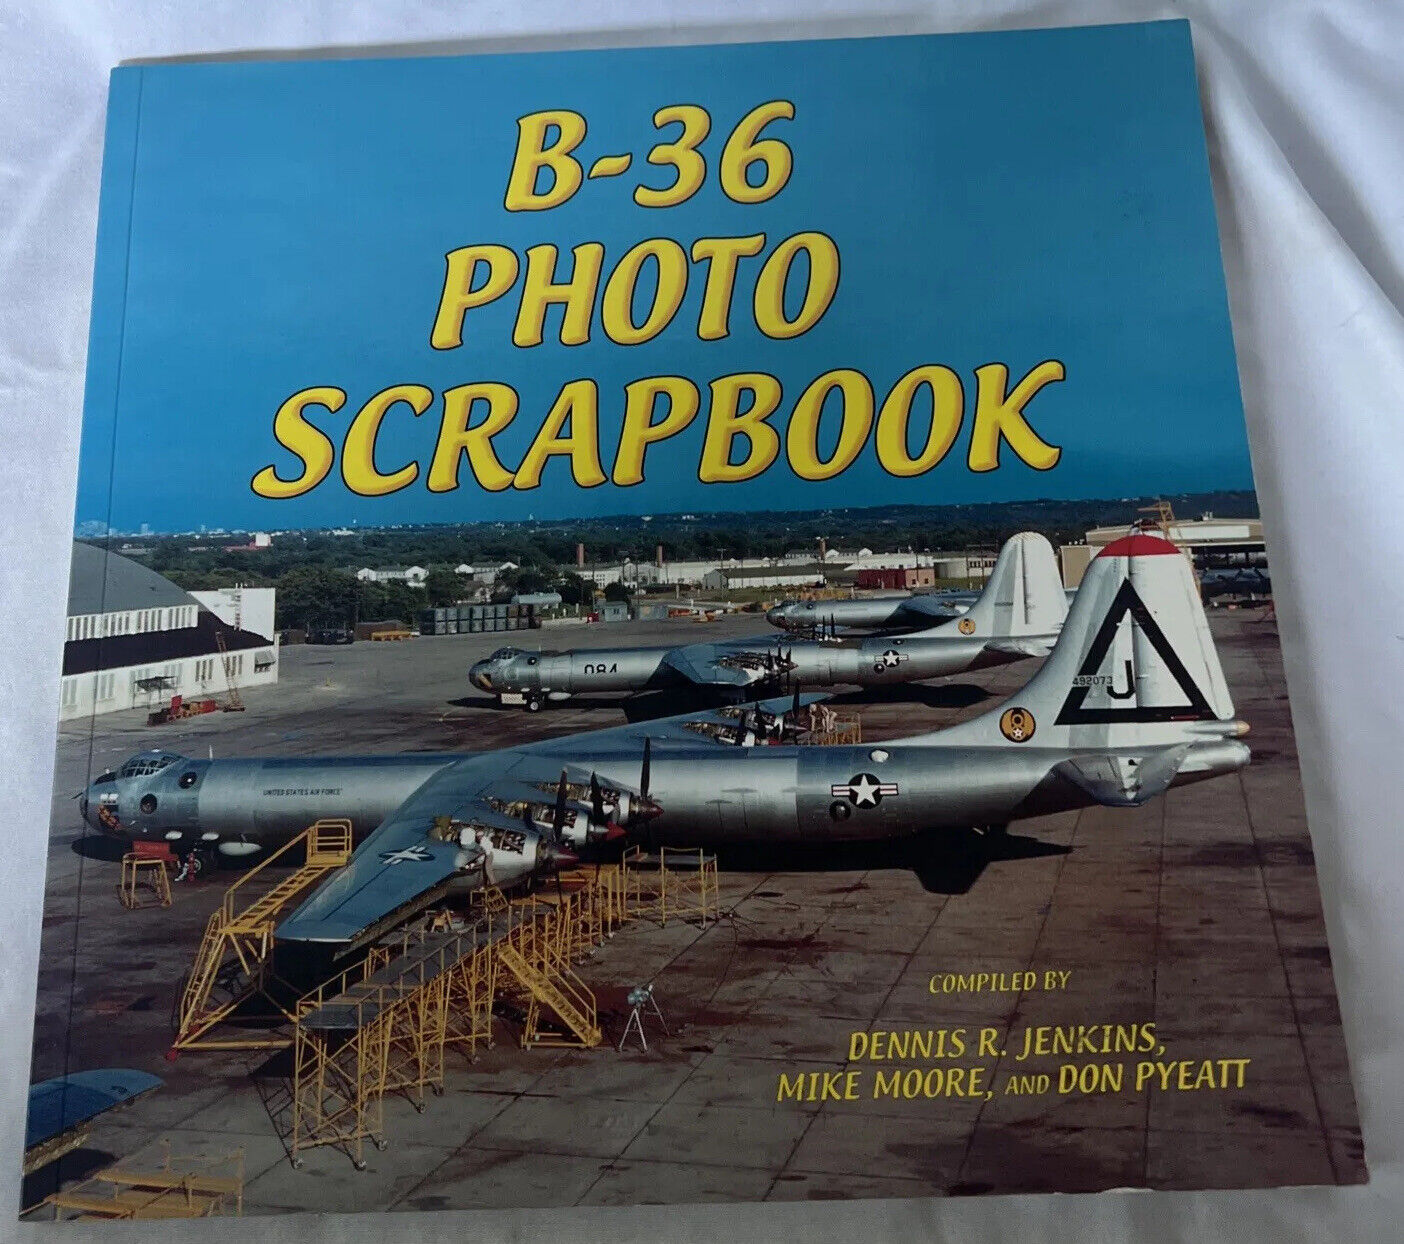 B-36 PHOTO SCRAPBOOK (Specialty Press)